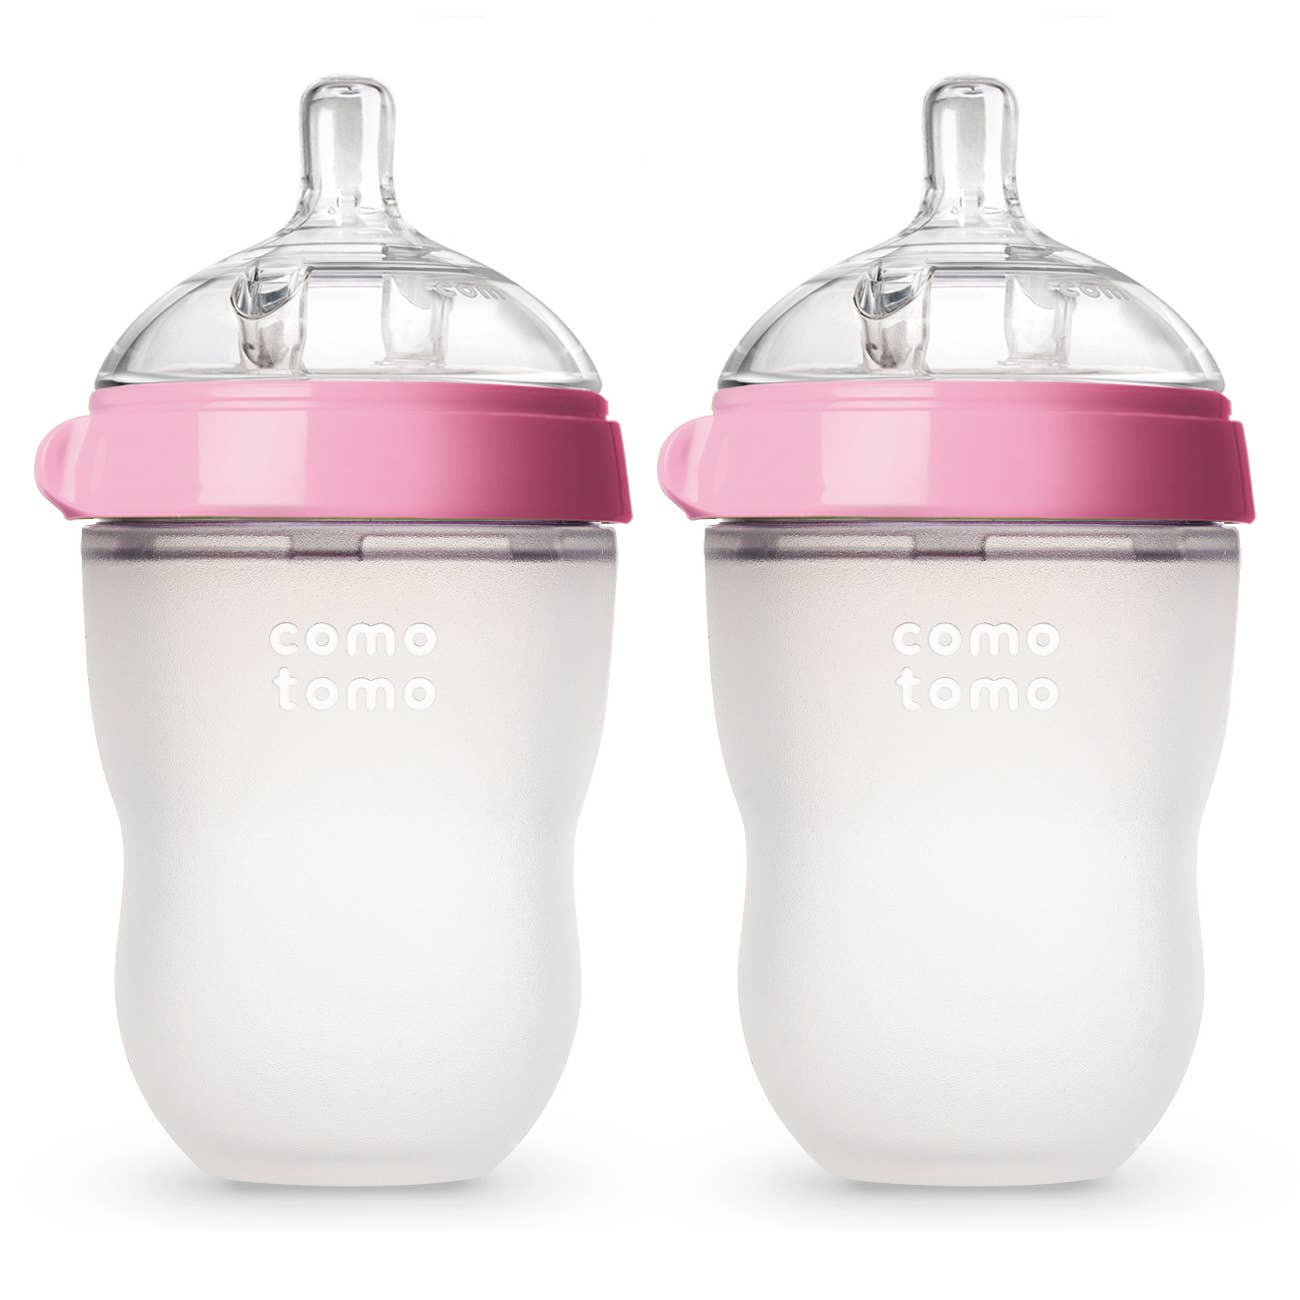 Comotomo Baby Bottle, Double Pack - 8 oz - Pink